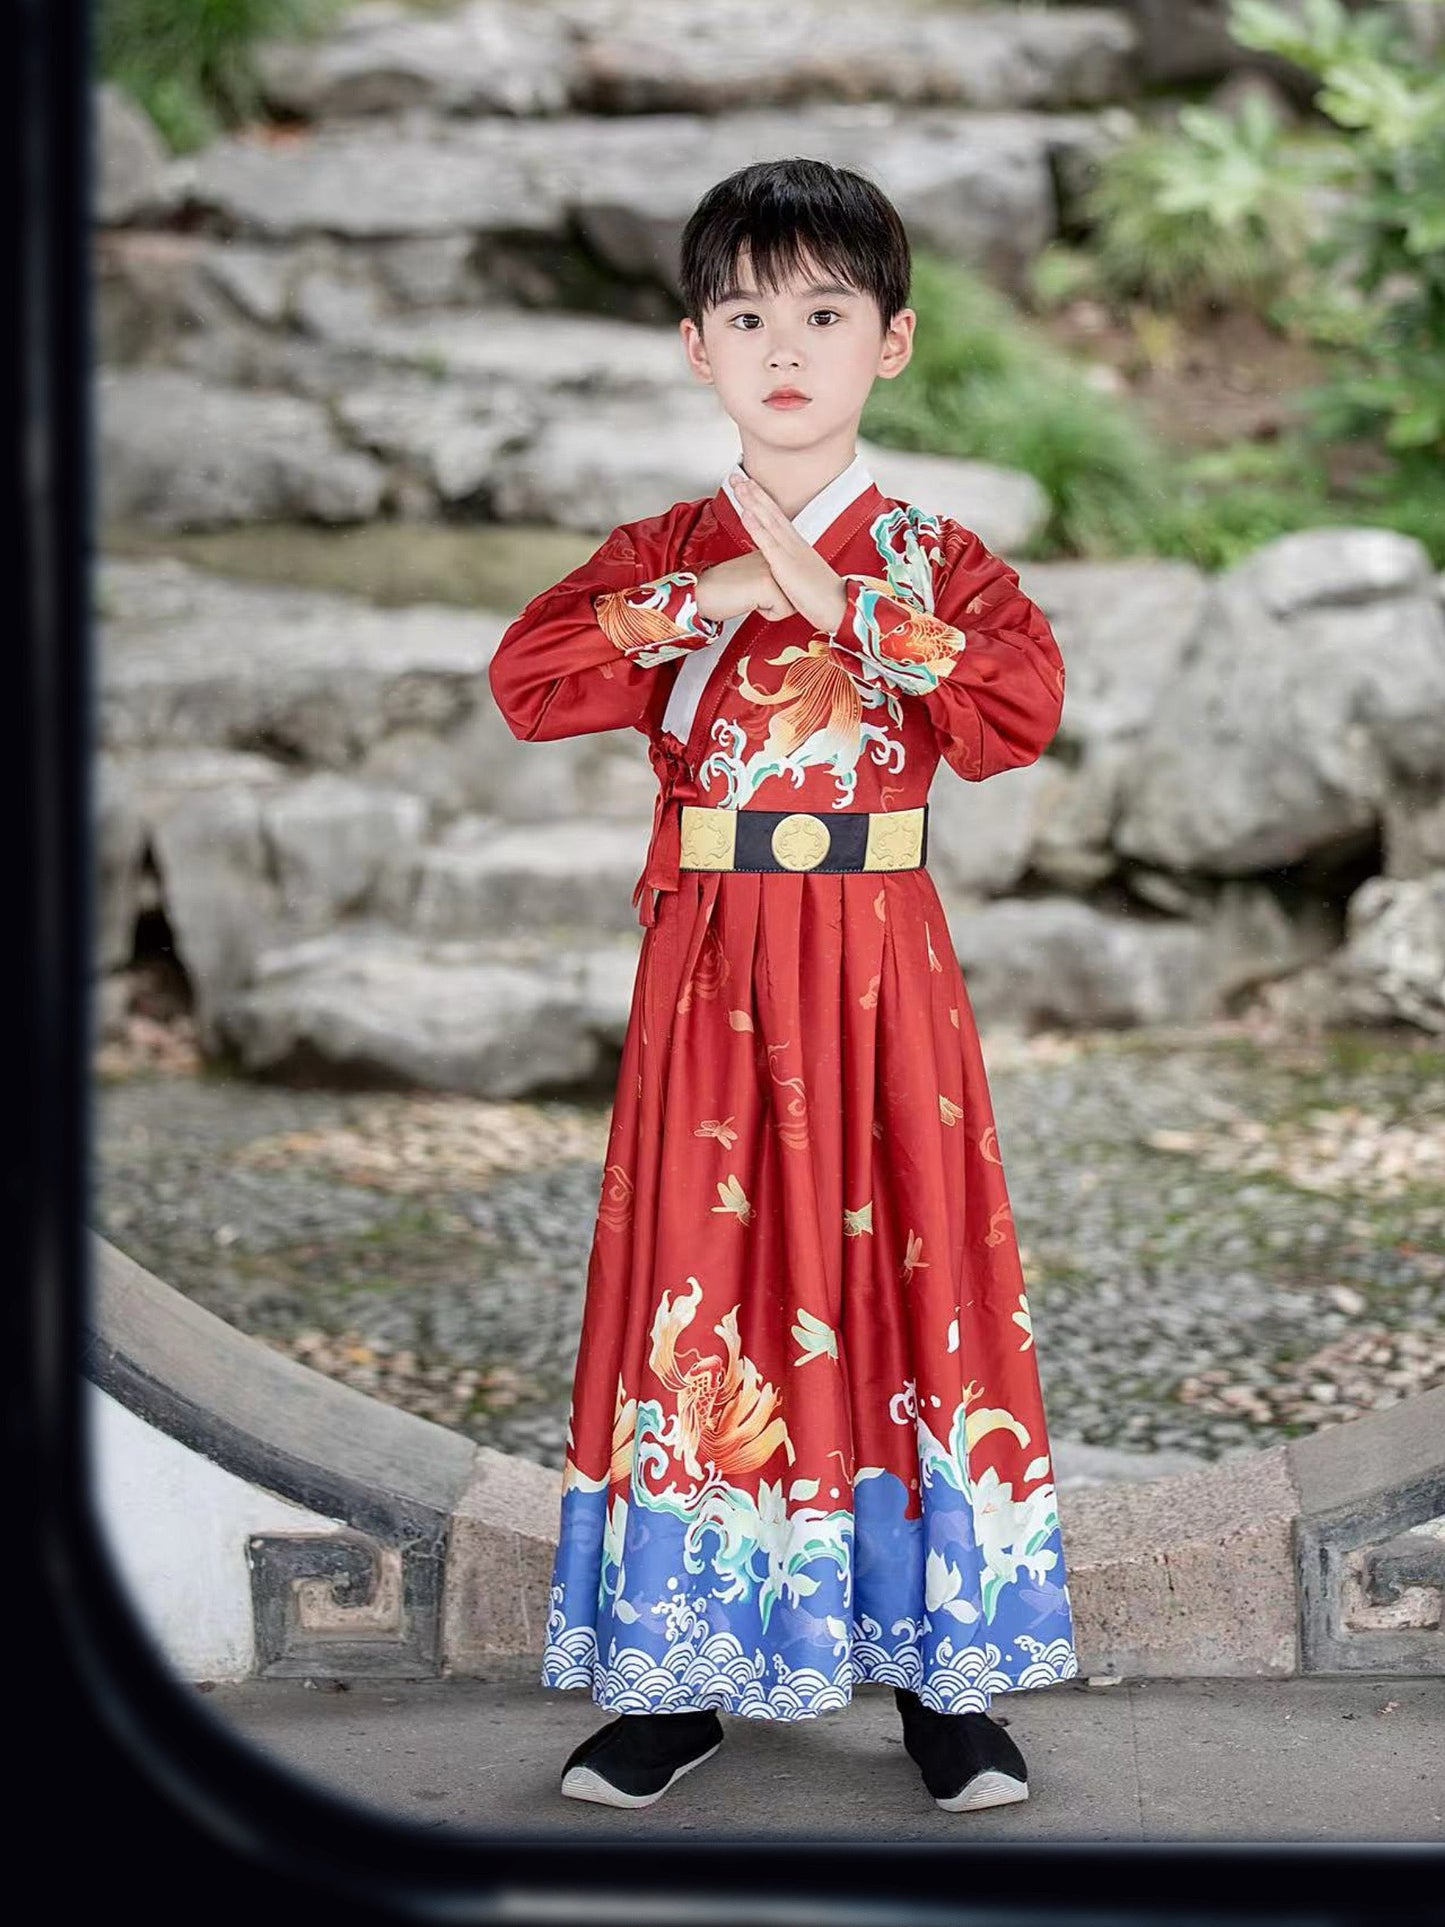 PreOrder: Lunar Fish Elegance: Vibrant Red Hanfu for Kids - Tang Dynasty Scholar Attire for Cultural Studies